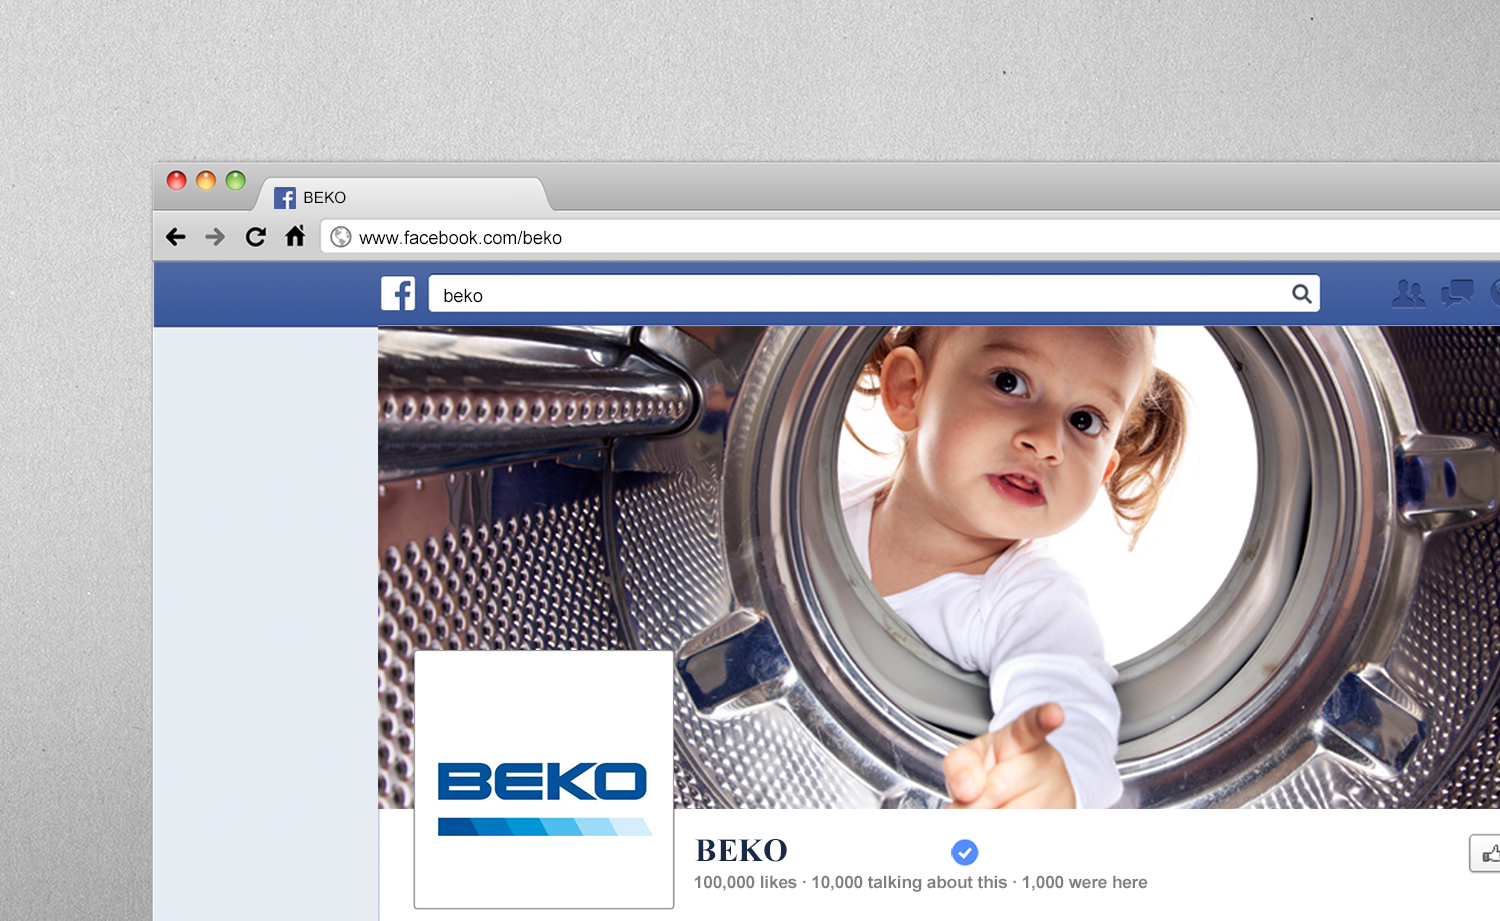 Biuro Podróży Reklamy will take care of Beko’s Facebook profile